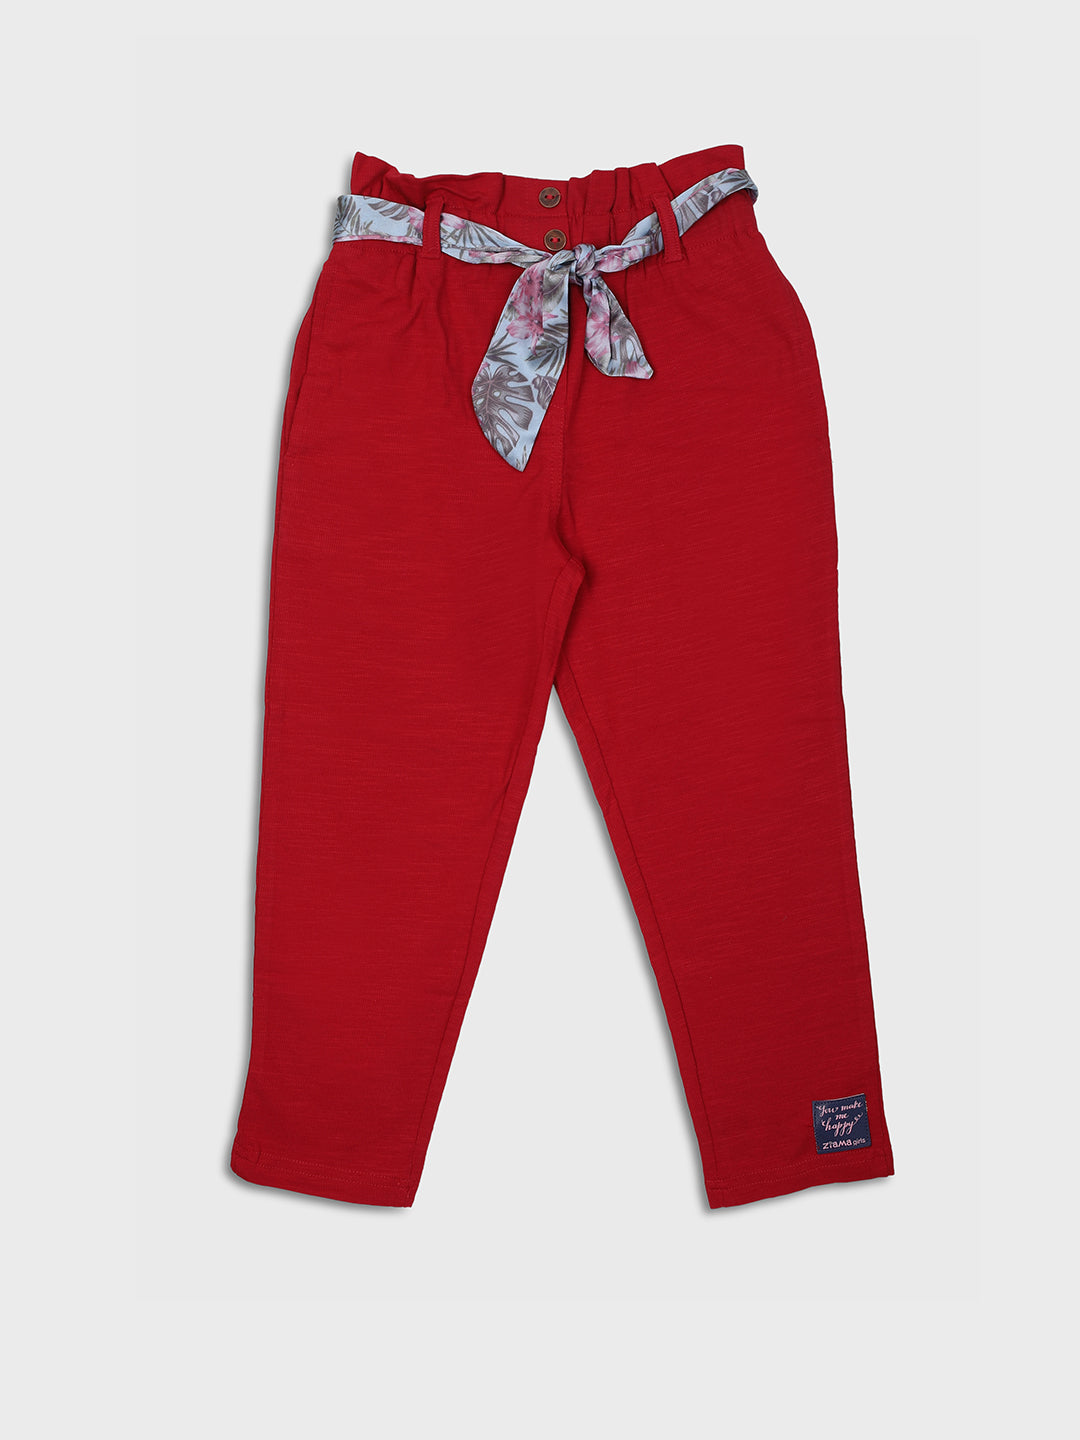 Ziama Girls Solid Stylish Capri With Belt-Red